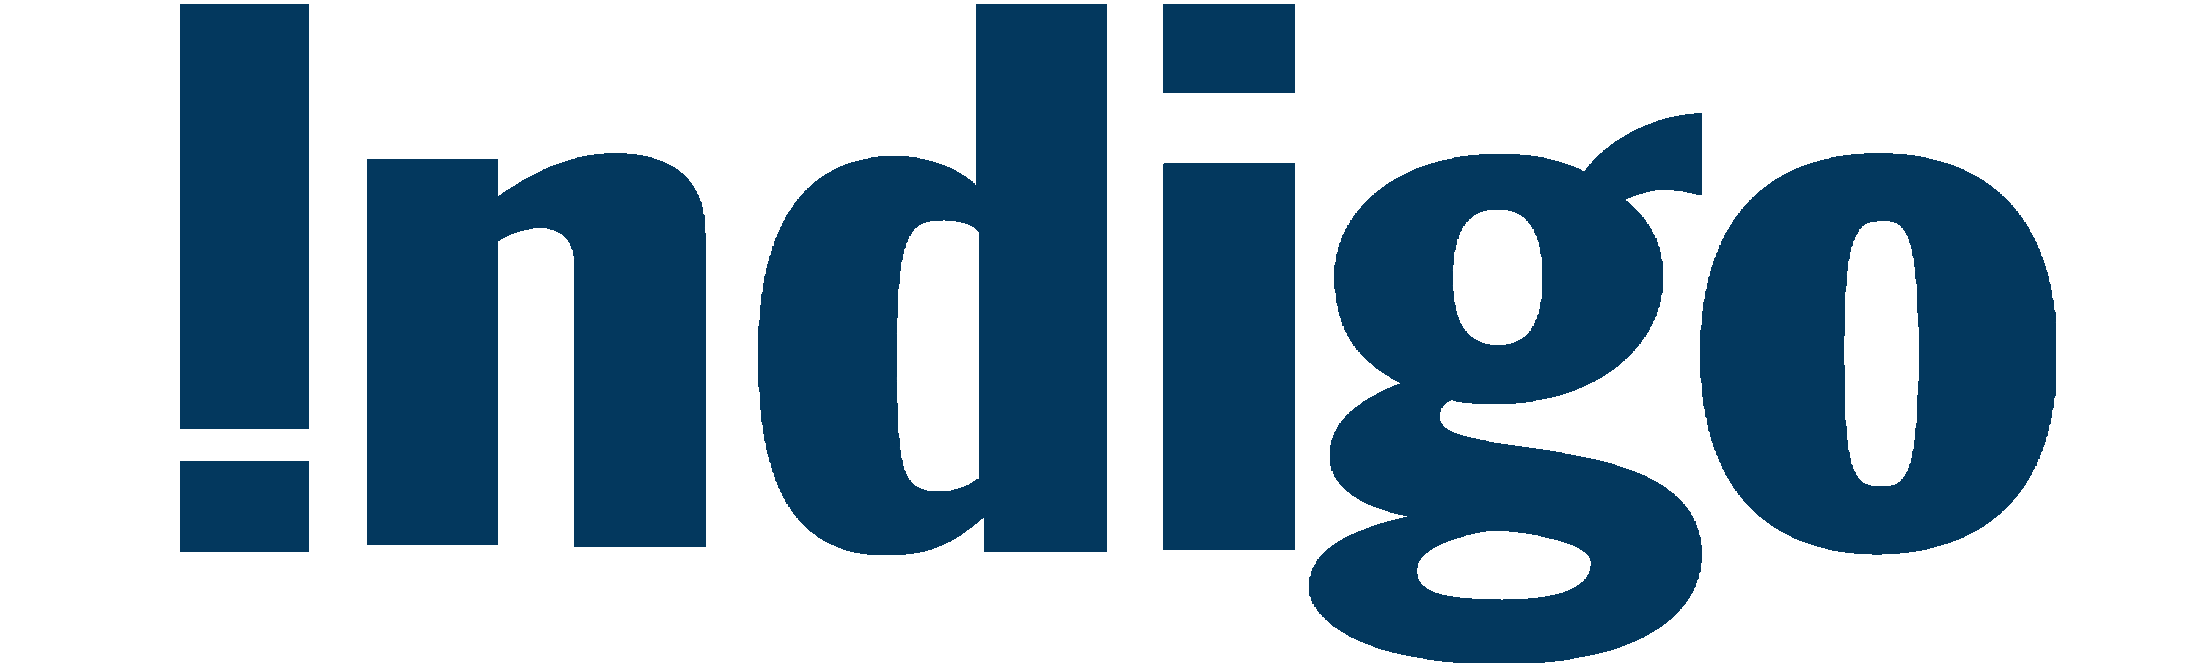 Indigo_logo.svg.png